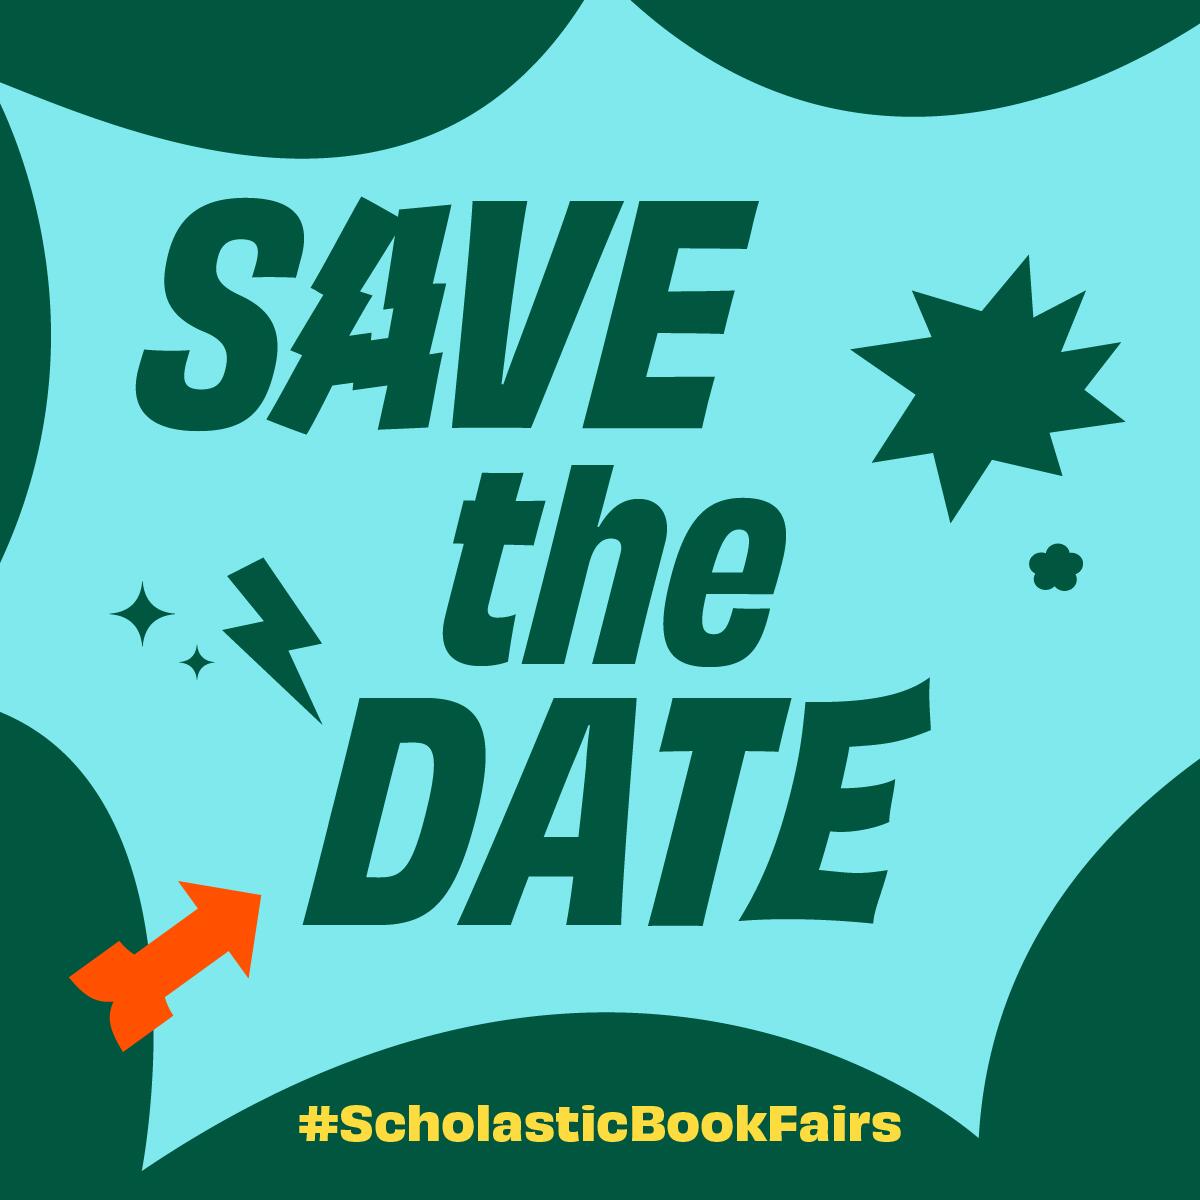 Check out the Schoolastic Book Fair